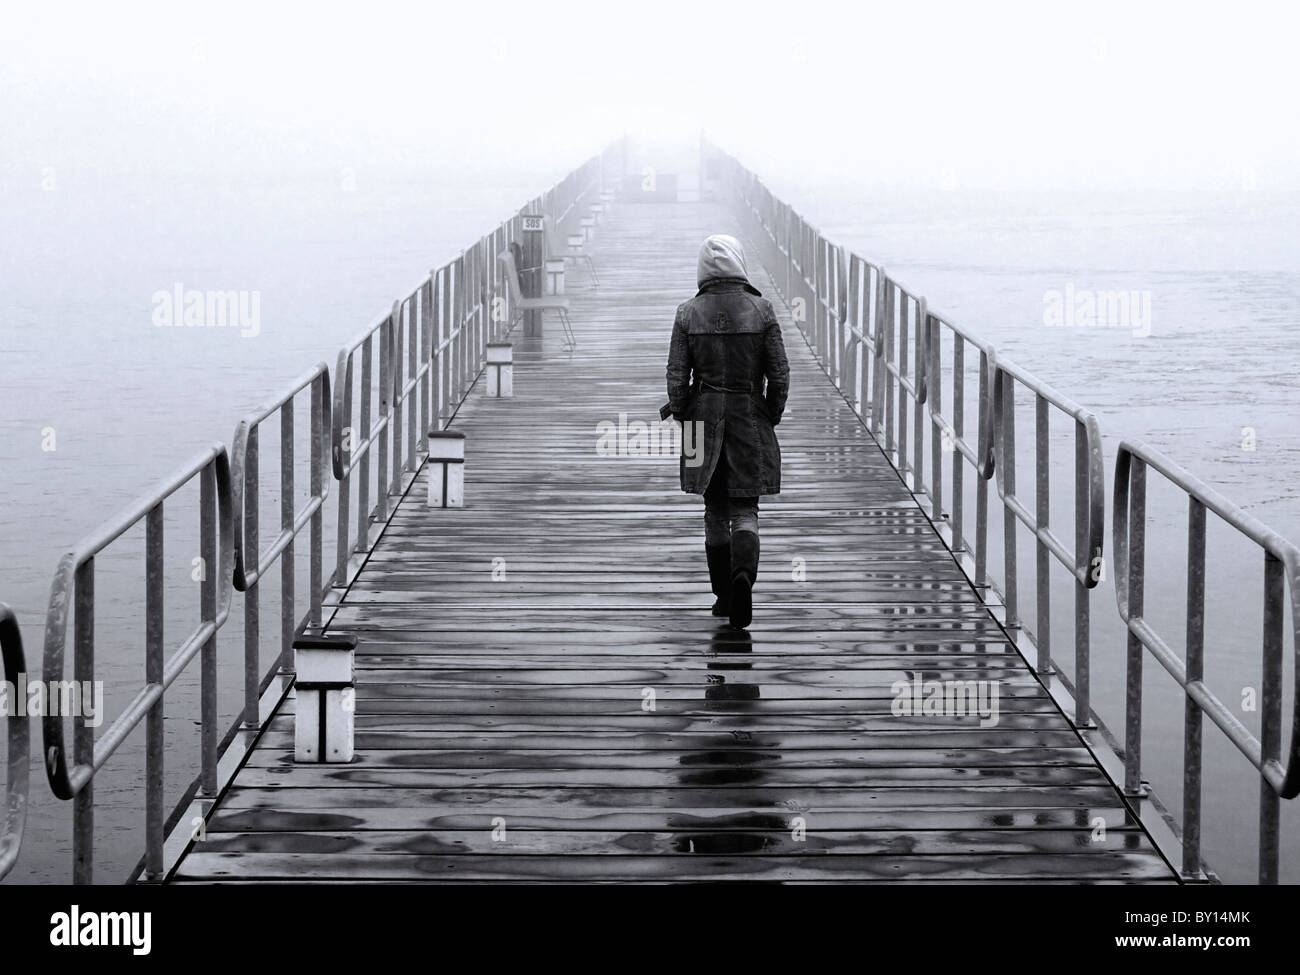 Край никуда. Человек на мосту. Человек на пирсе. Одинокий человек на мосту. Одинокий парень.